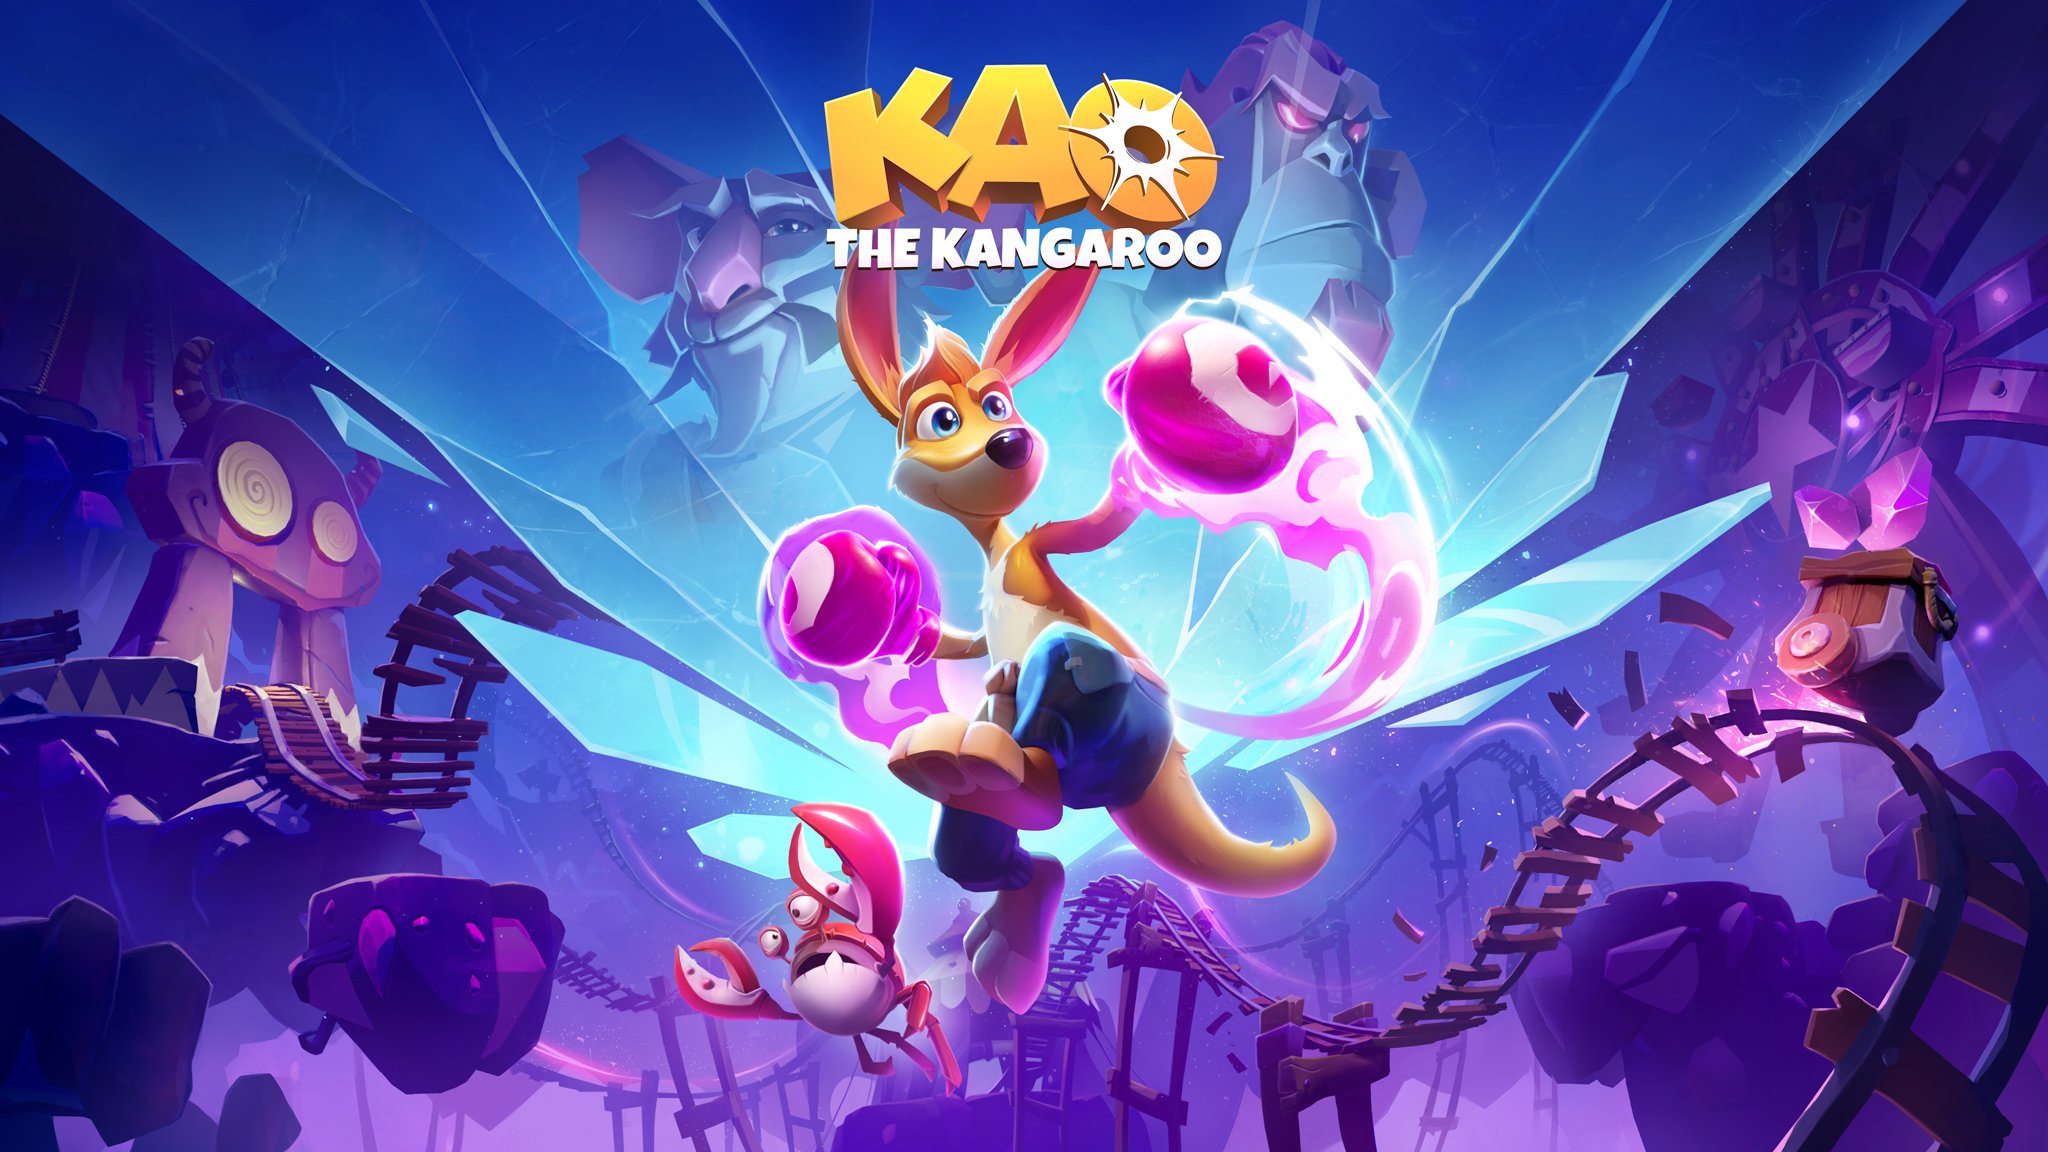 Kangurek KAO - grafika promocyjna (źródło: Tate Multimedia)